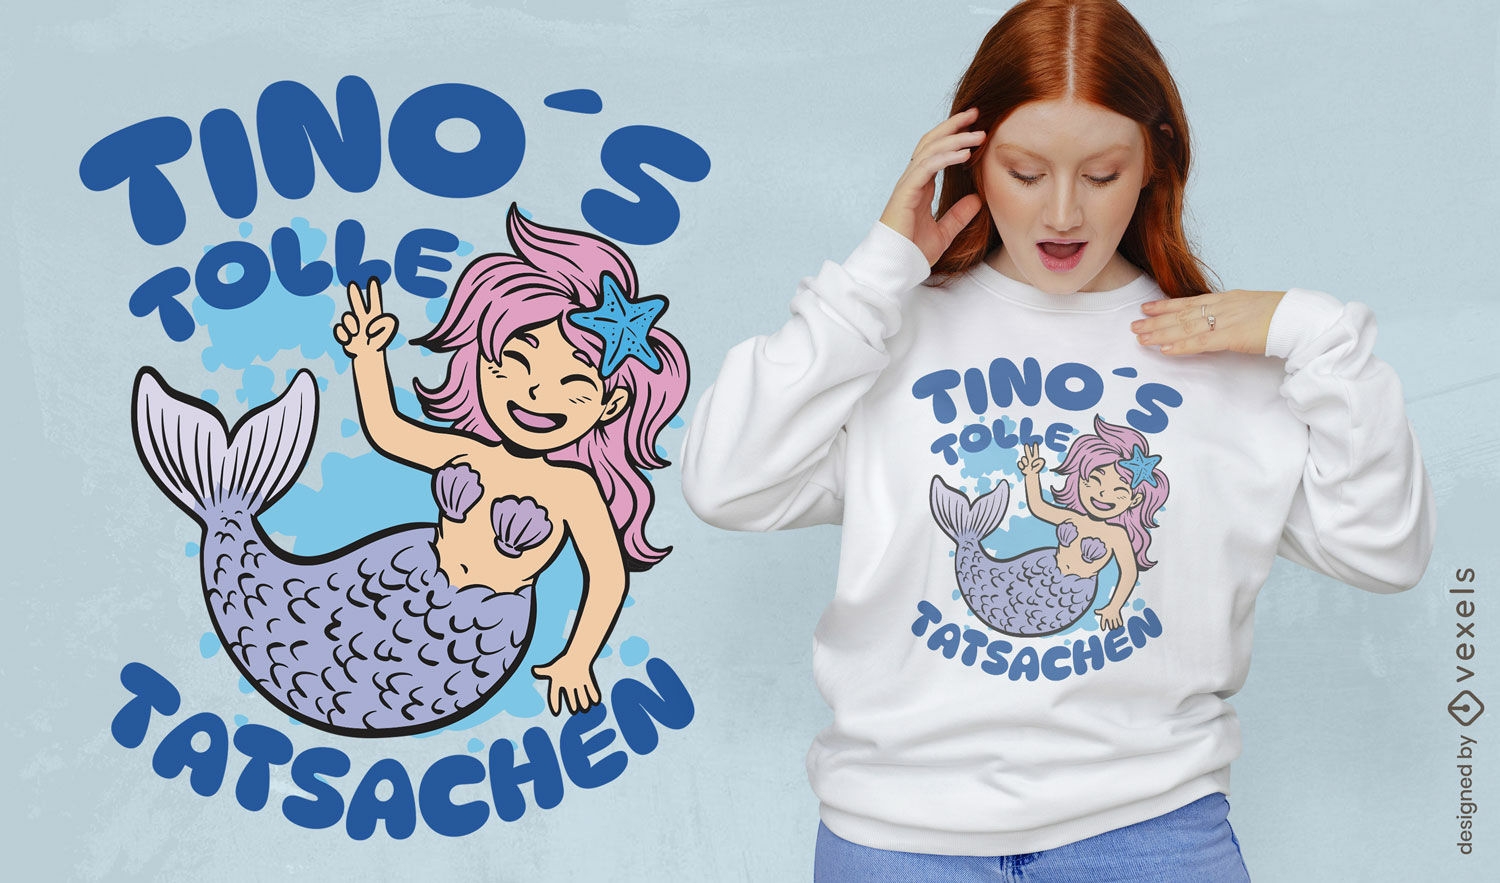  Mermaid's enchanting tales t-shirt design